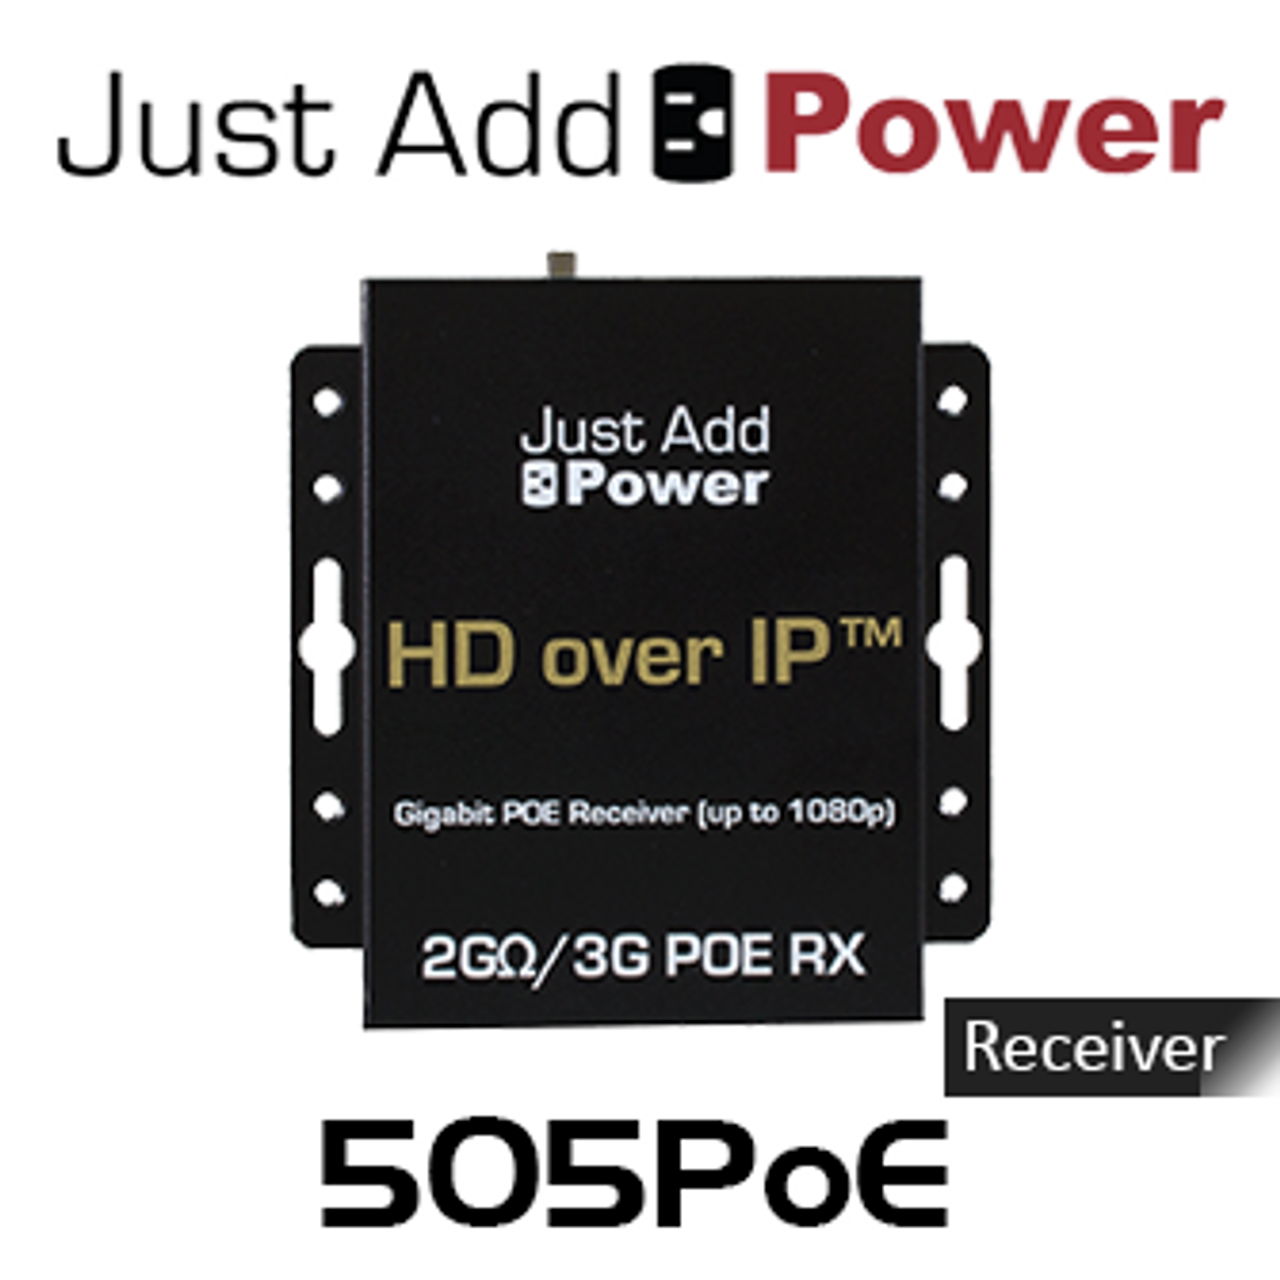 JAP 505PoE 1080p Gigabit PoE Receiver